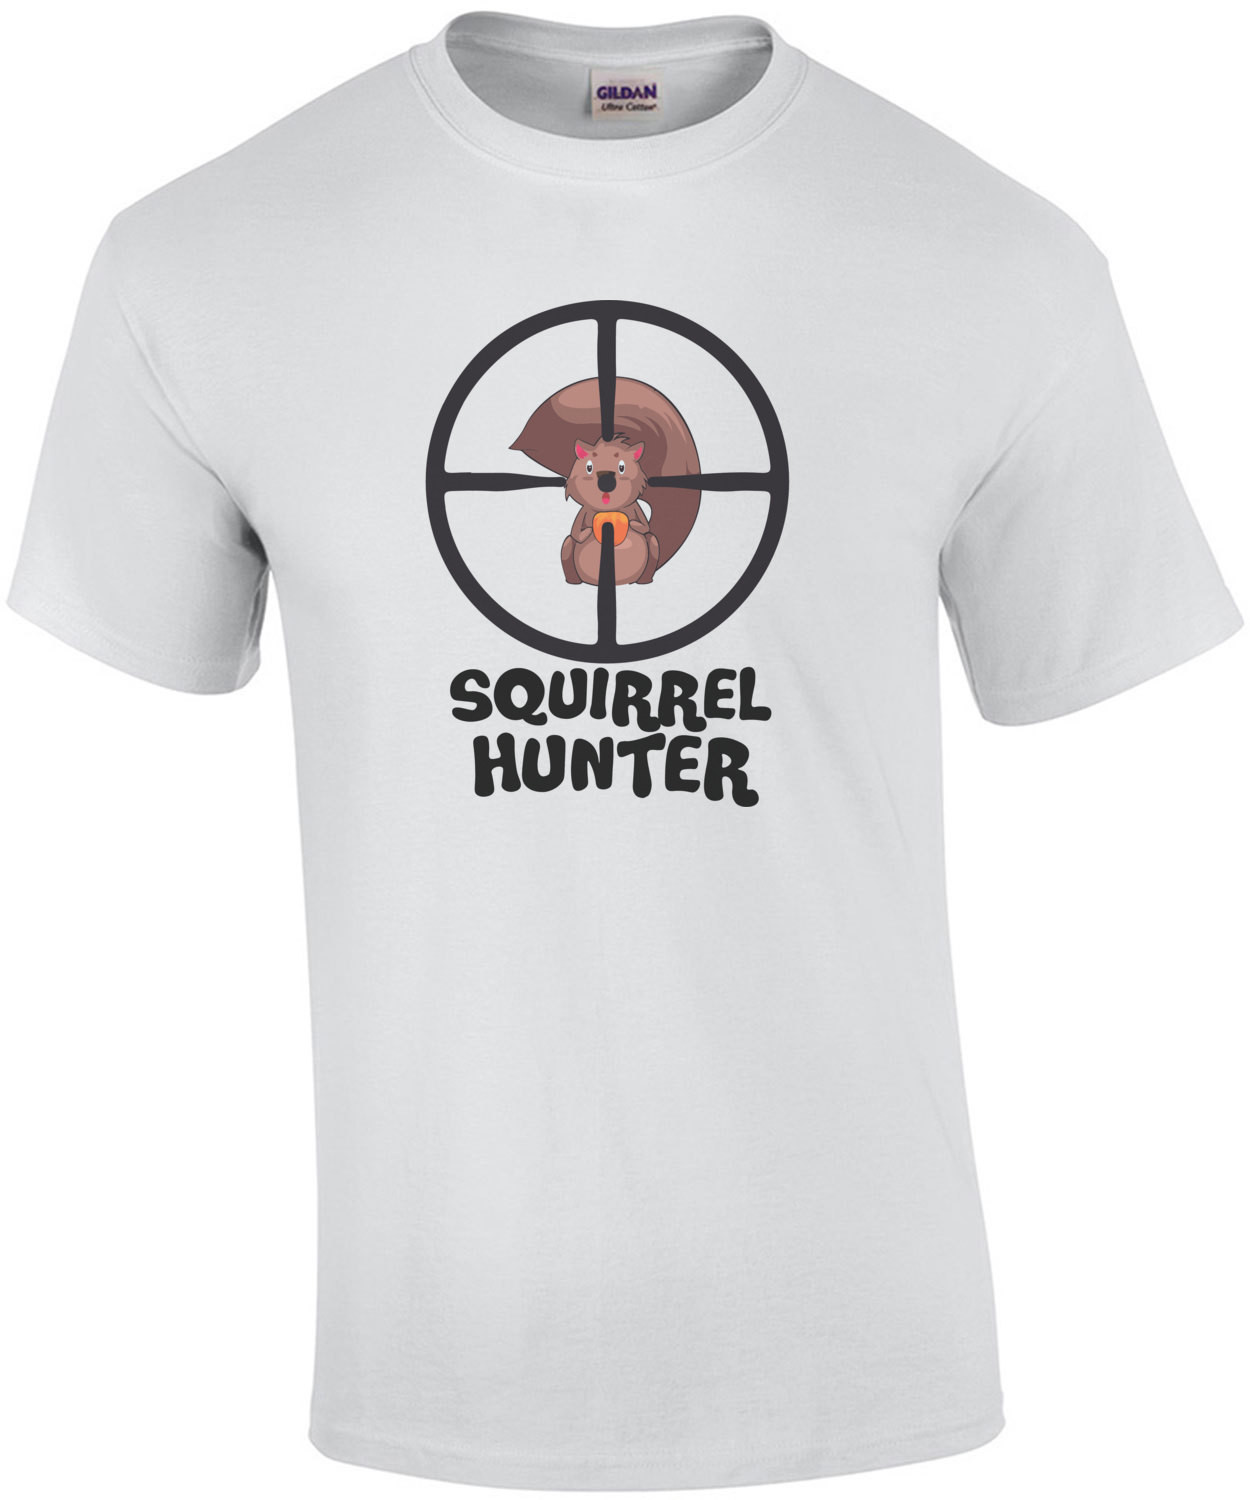 Squirrel Hunter - Funny Hunting T-Shirt